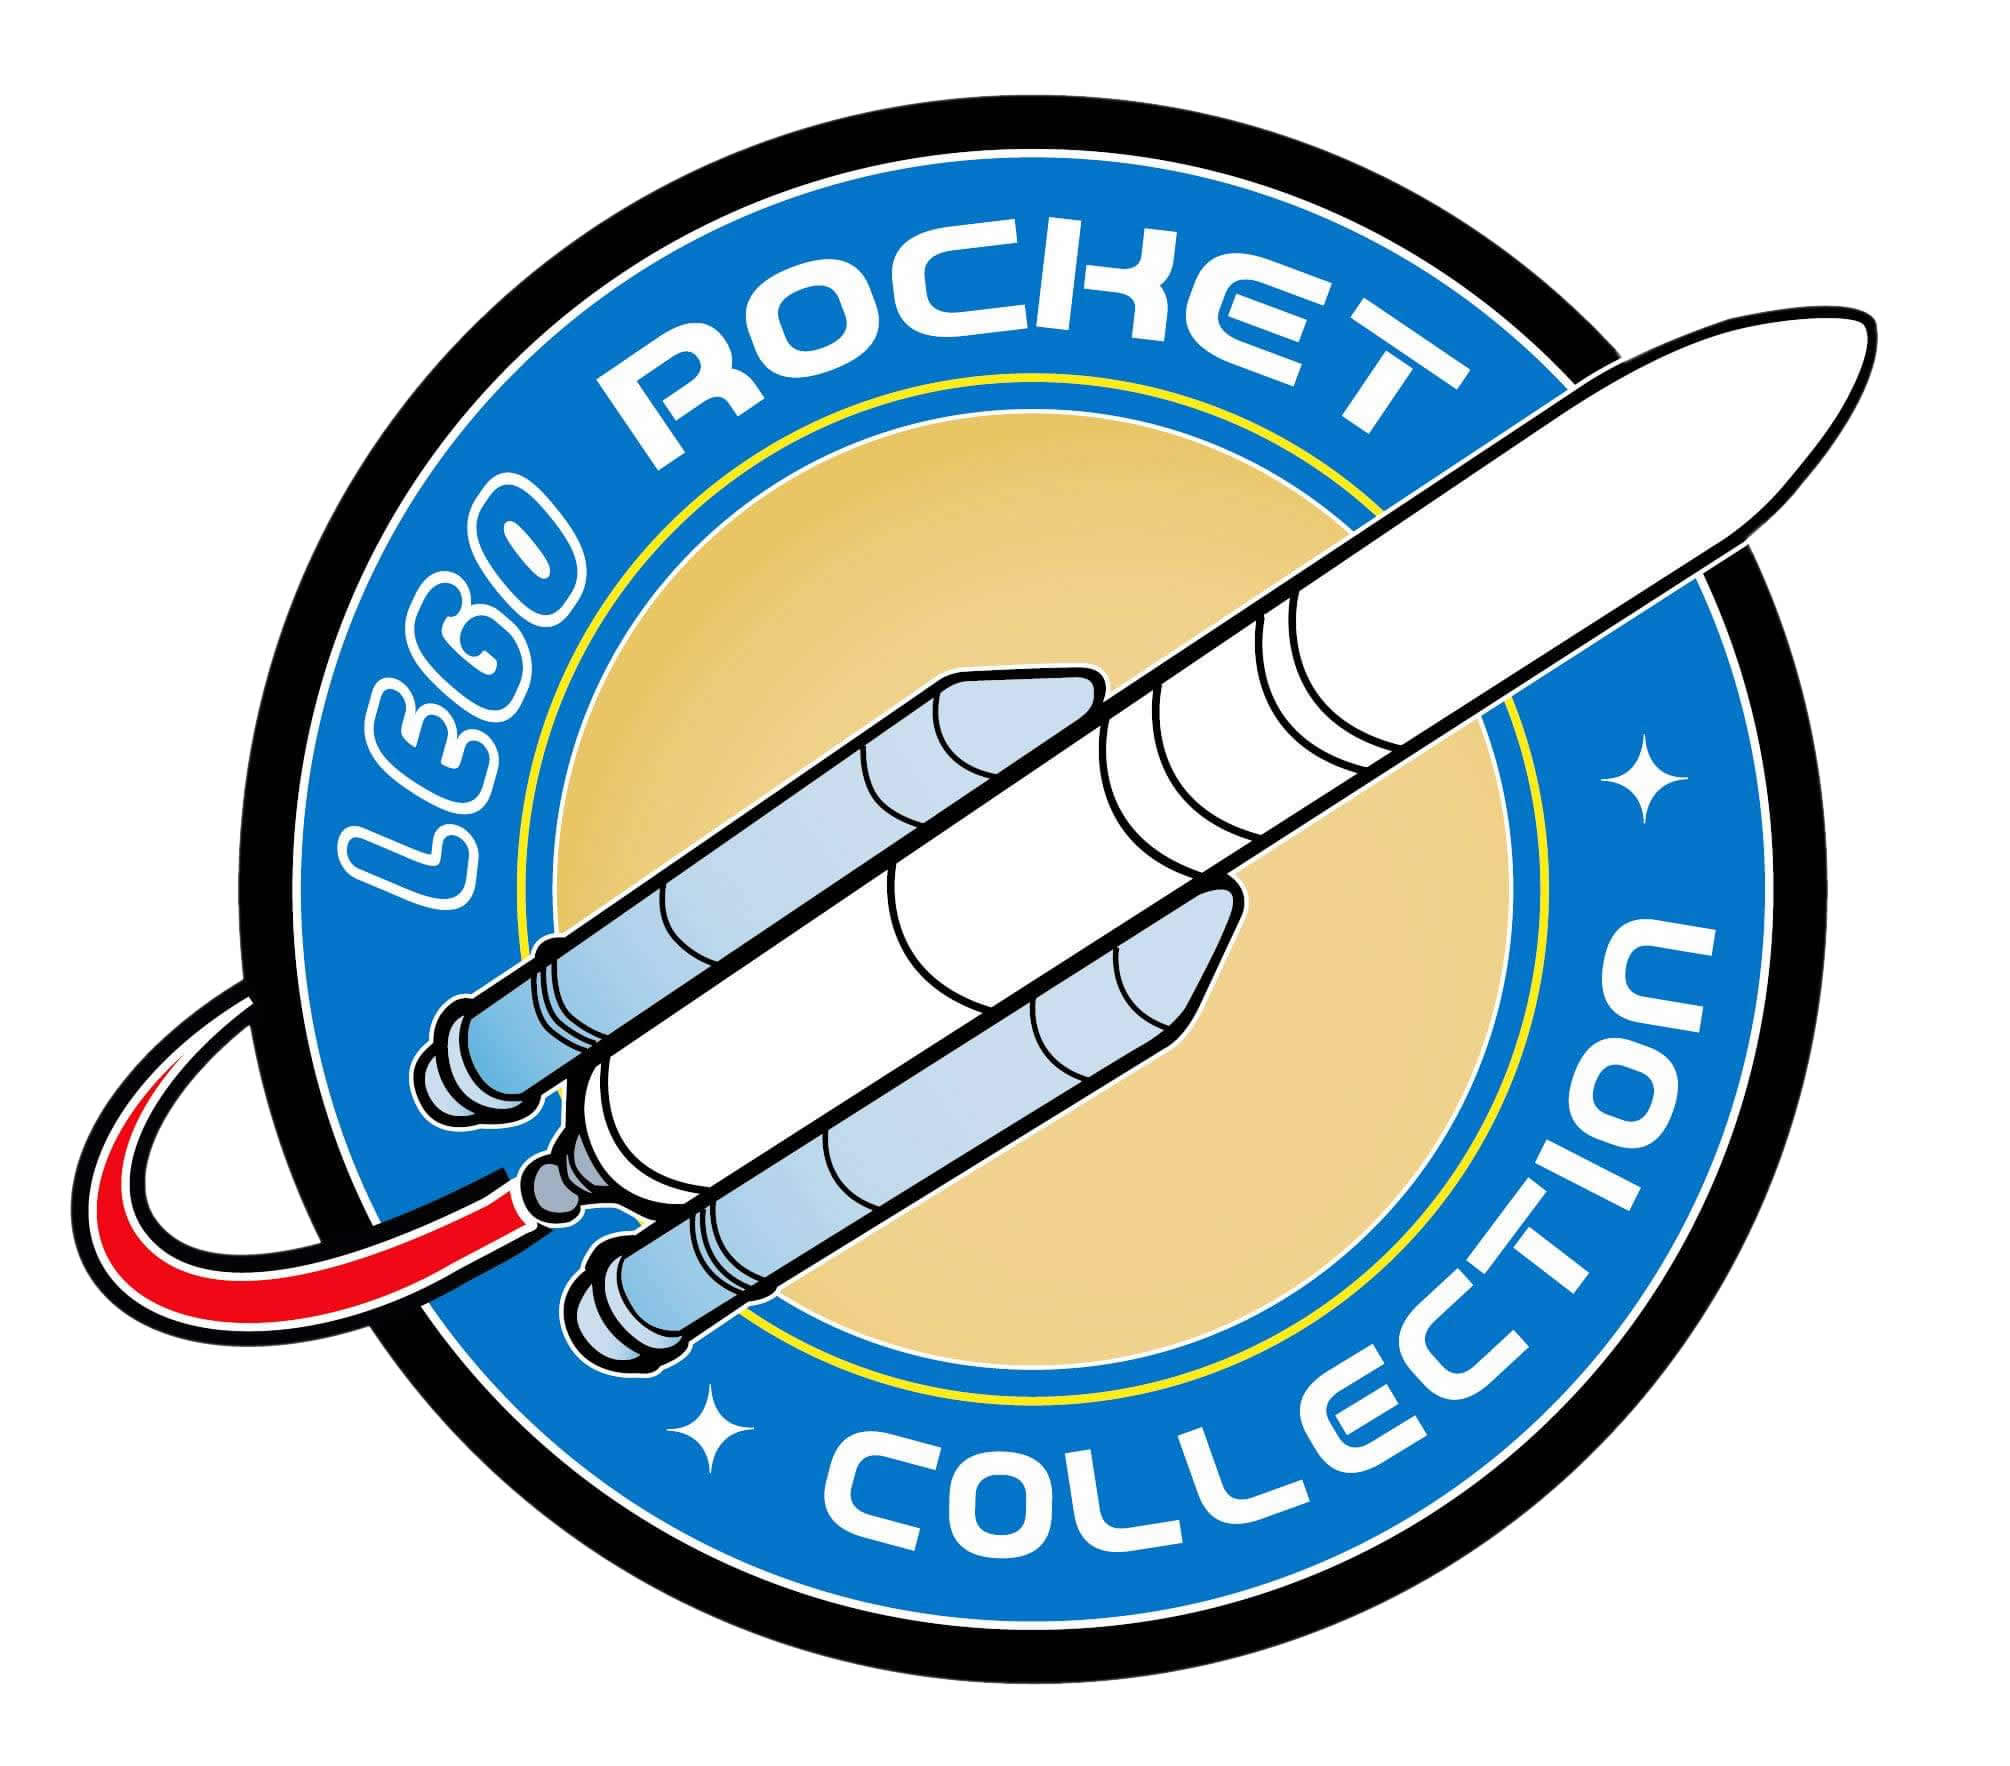 Lego Rocket Collection